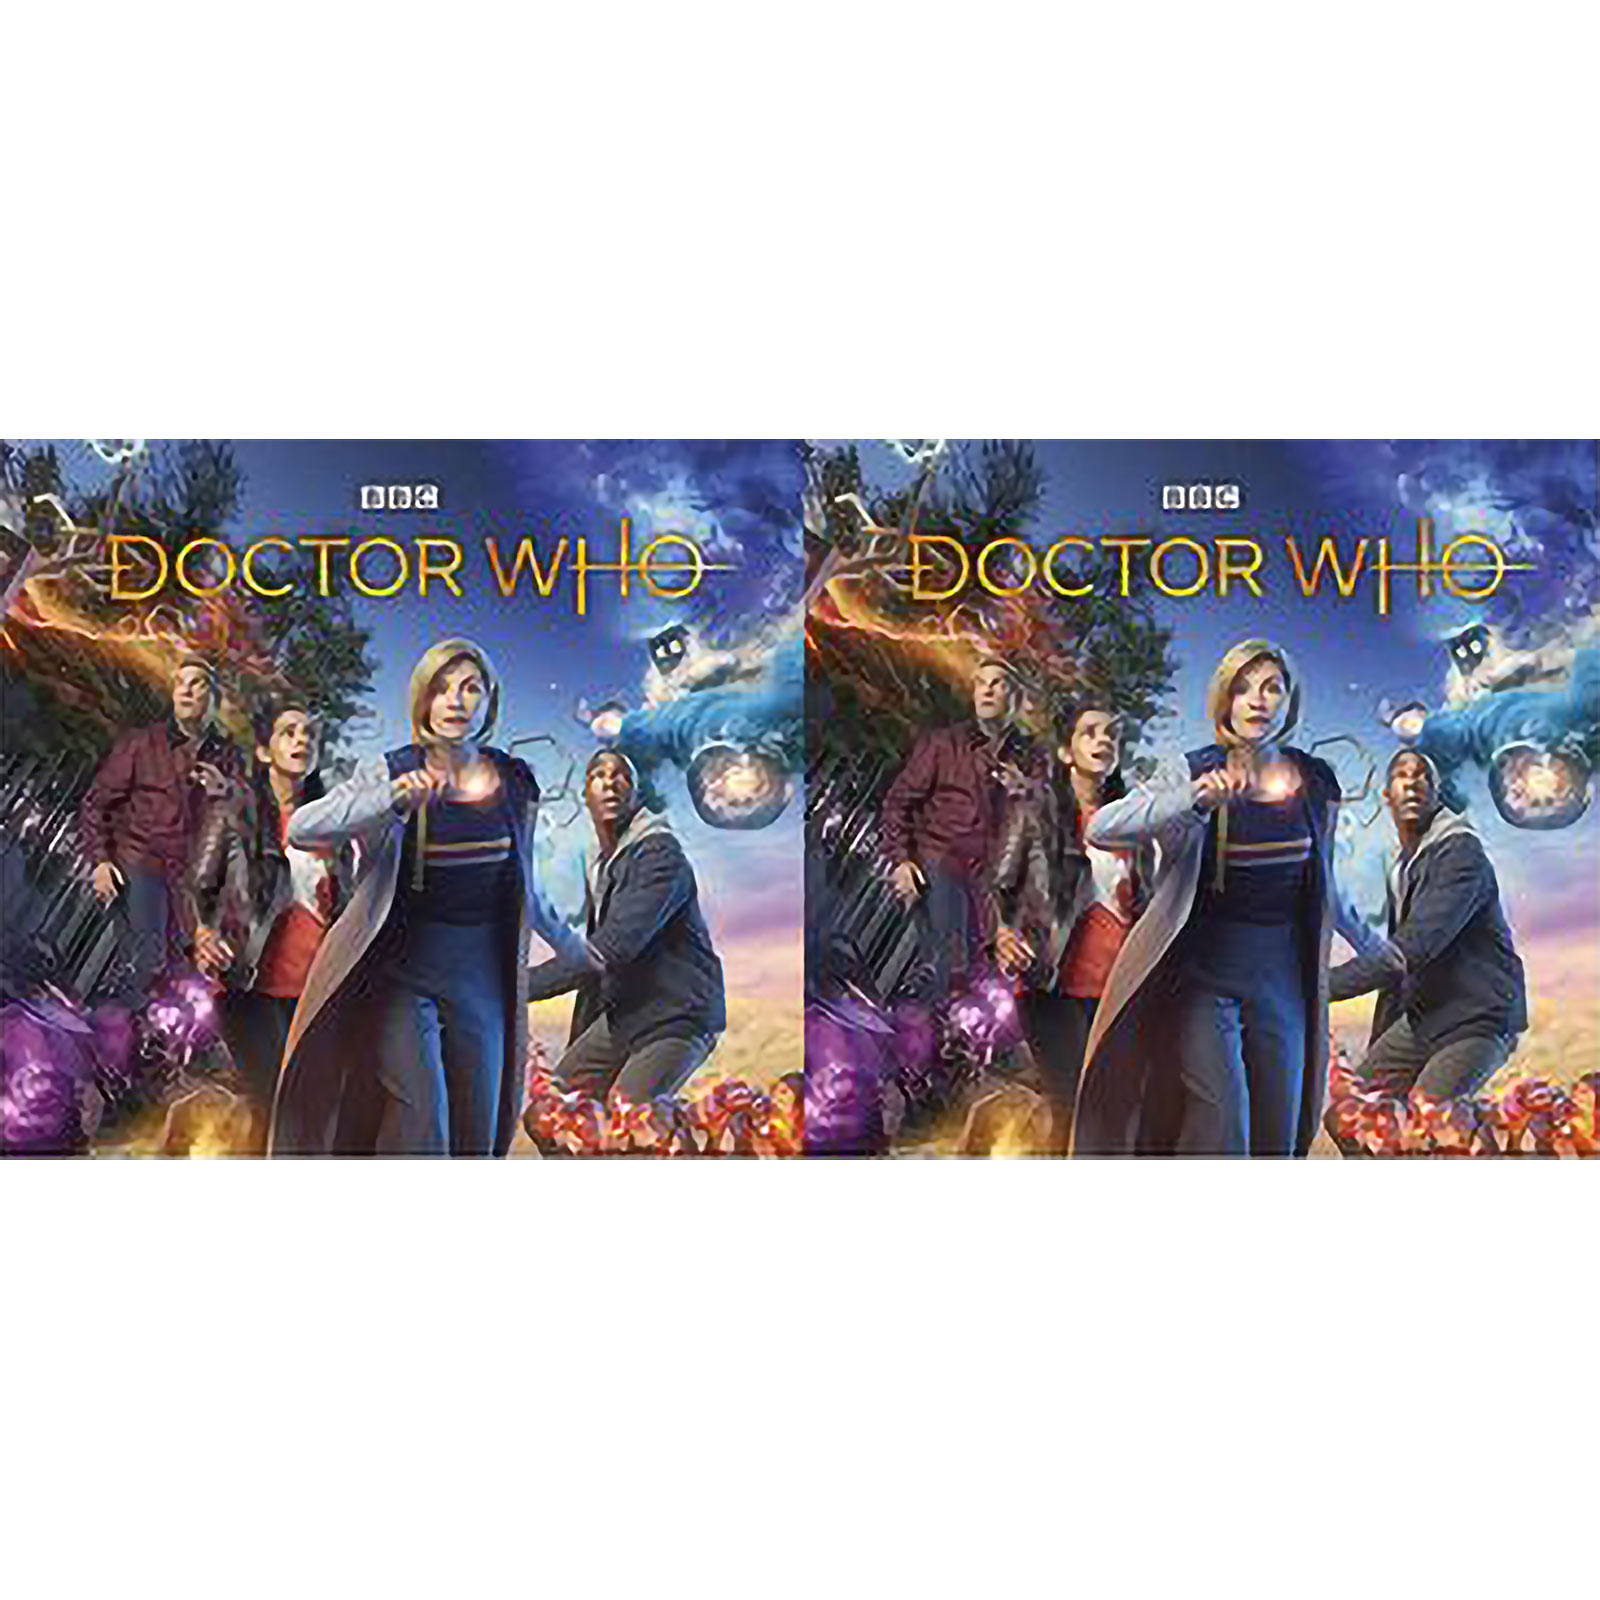 Doctor Who - Season 12 Characters Mug